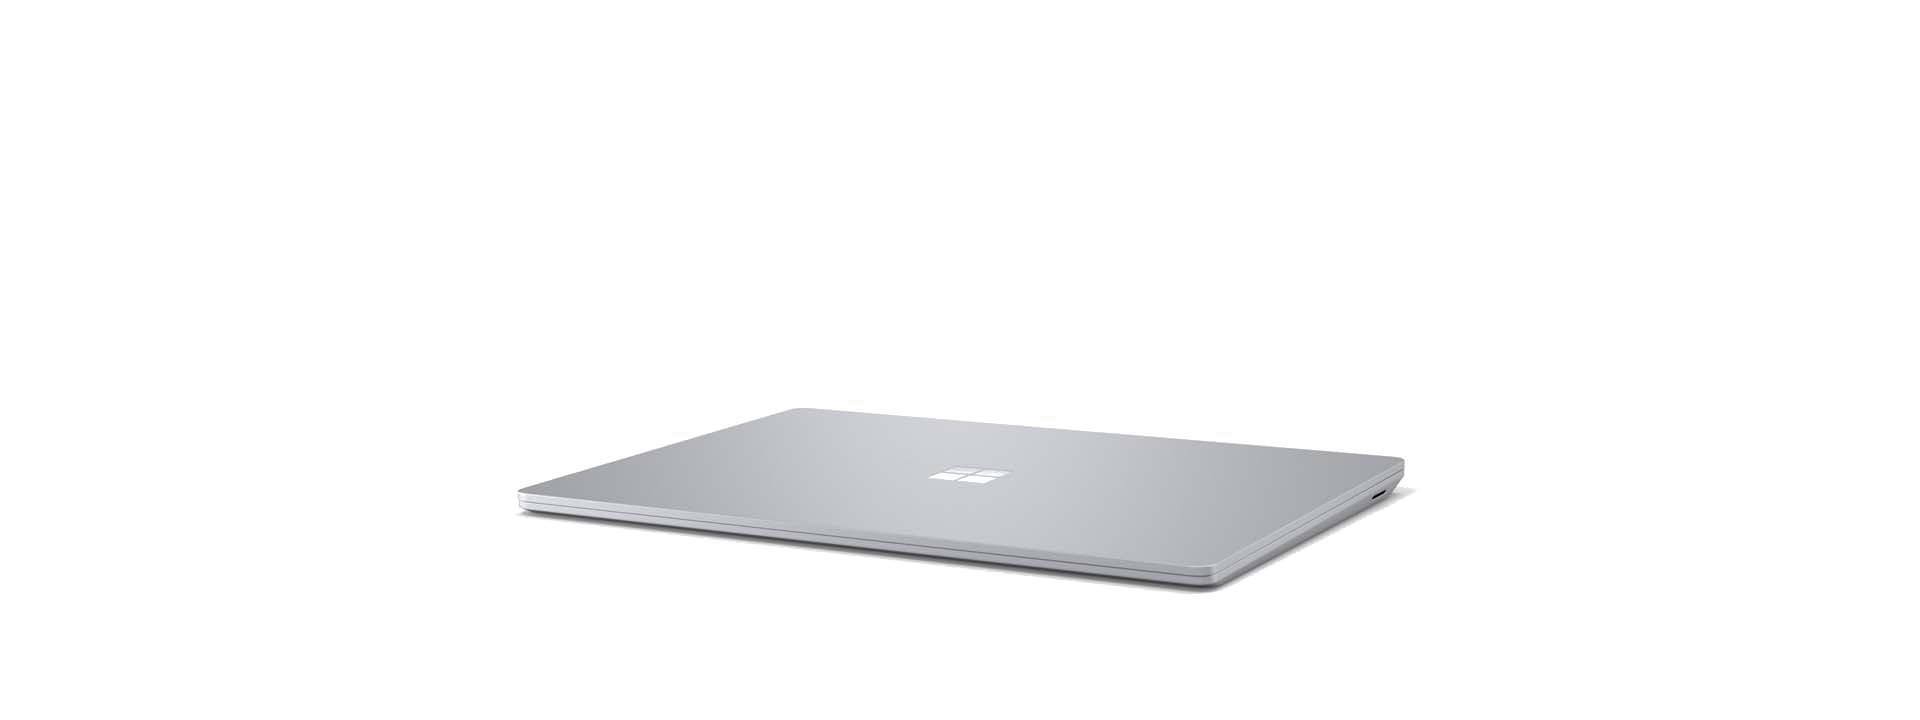 Obrót komputera Surface Laptop 3 o 360 stopni